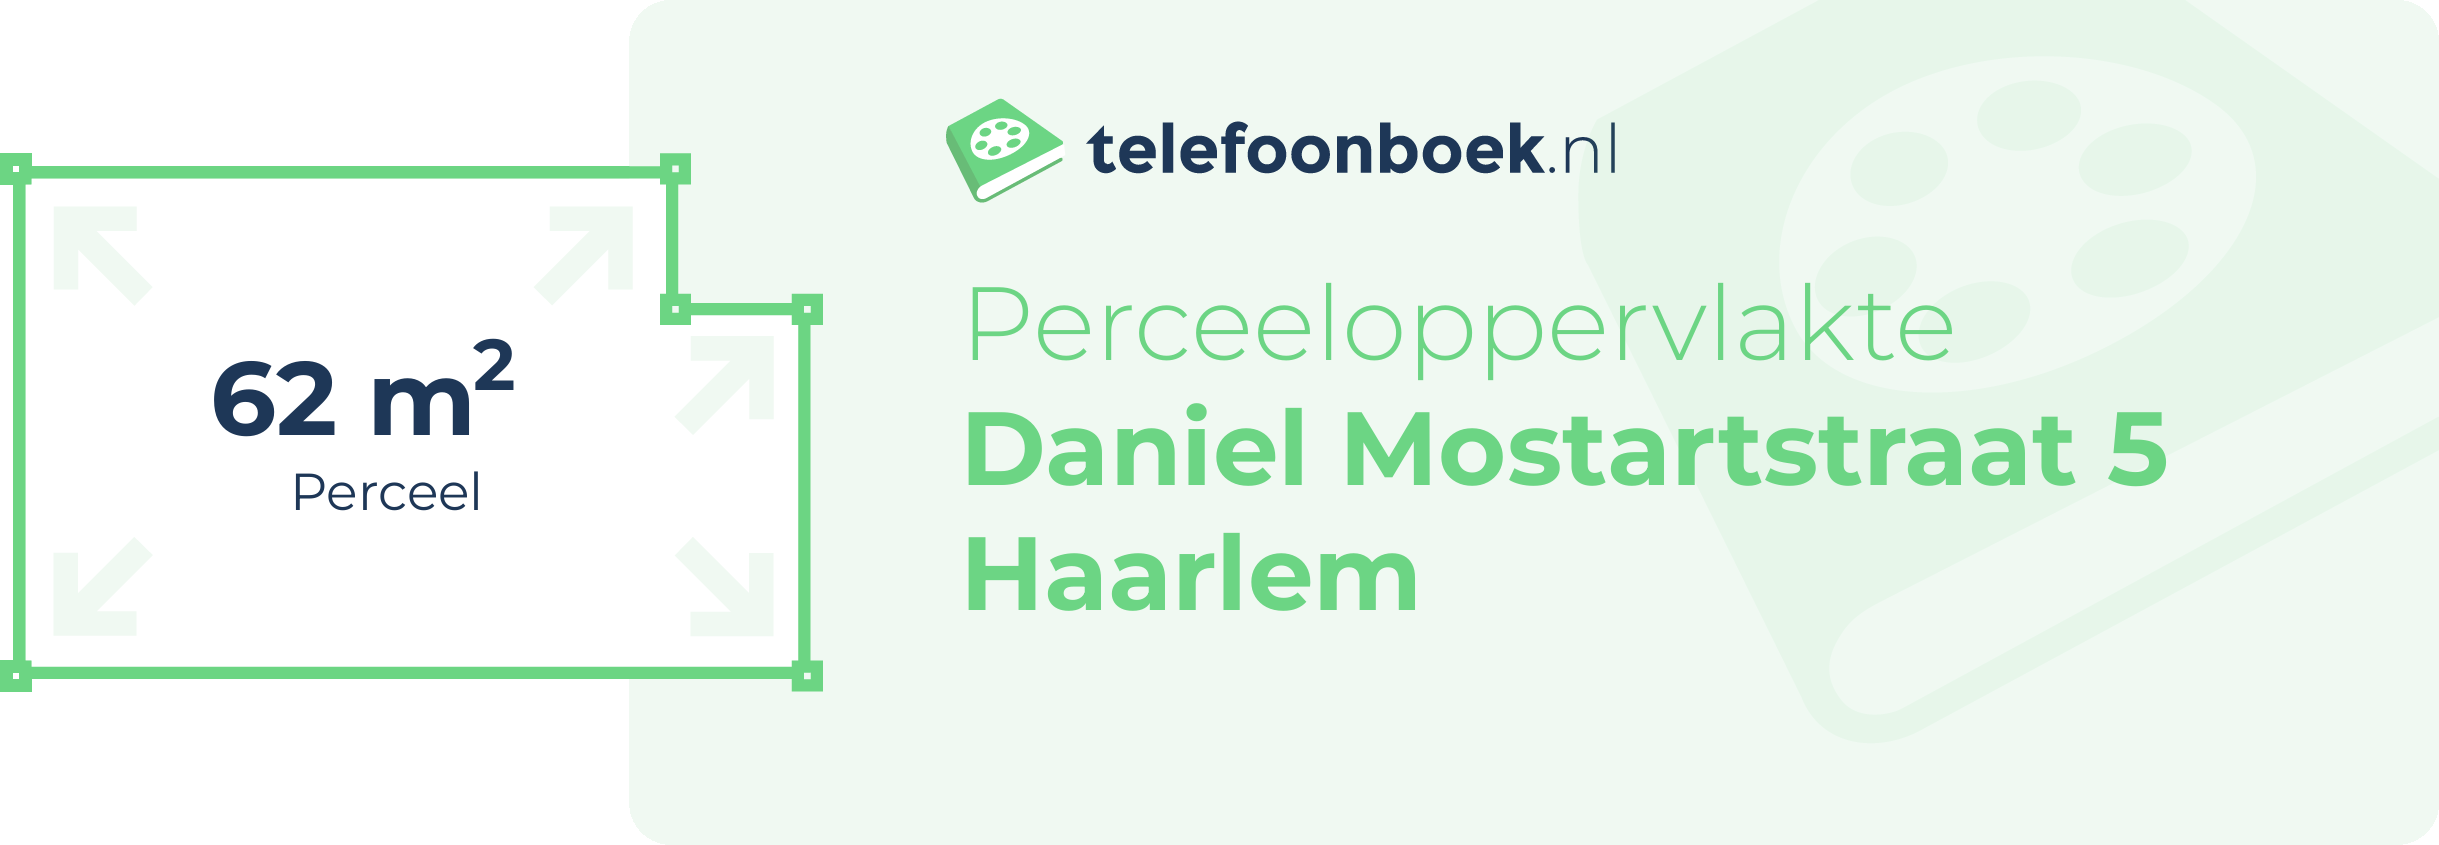 Perceeloppervlakte Daniel Mostartstraat 5 Haarlem